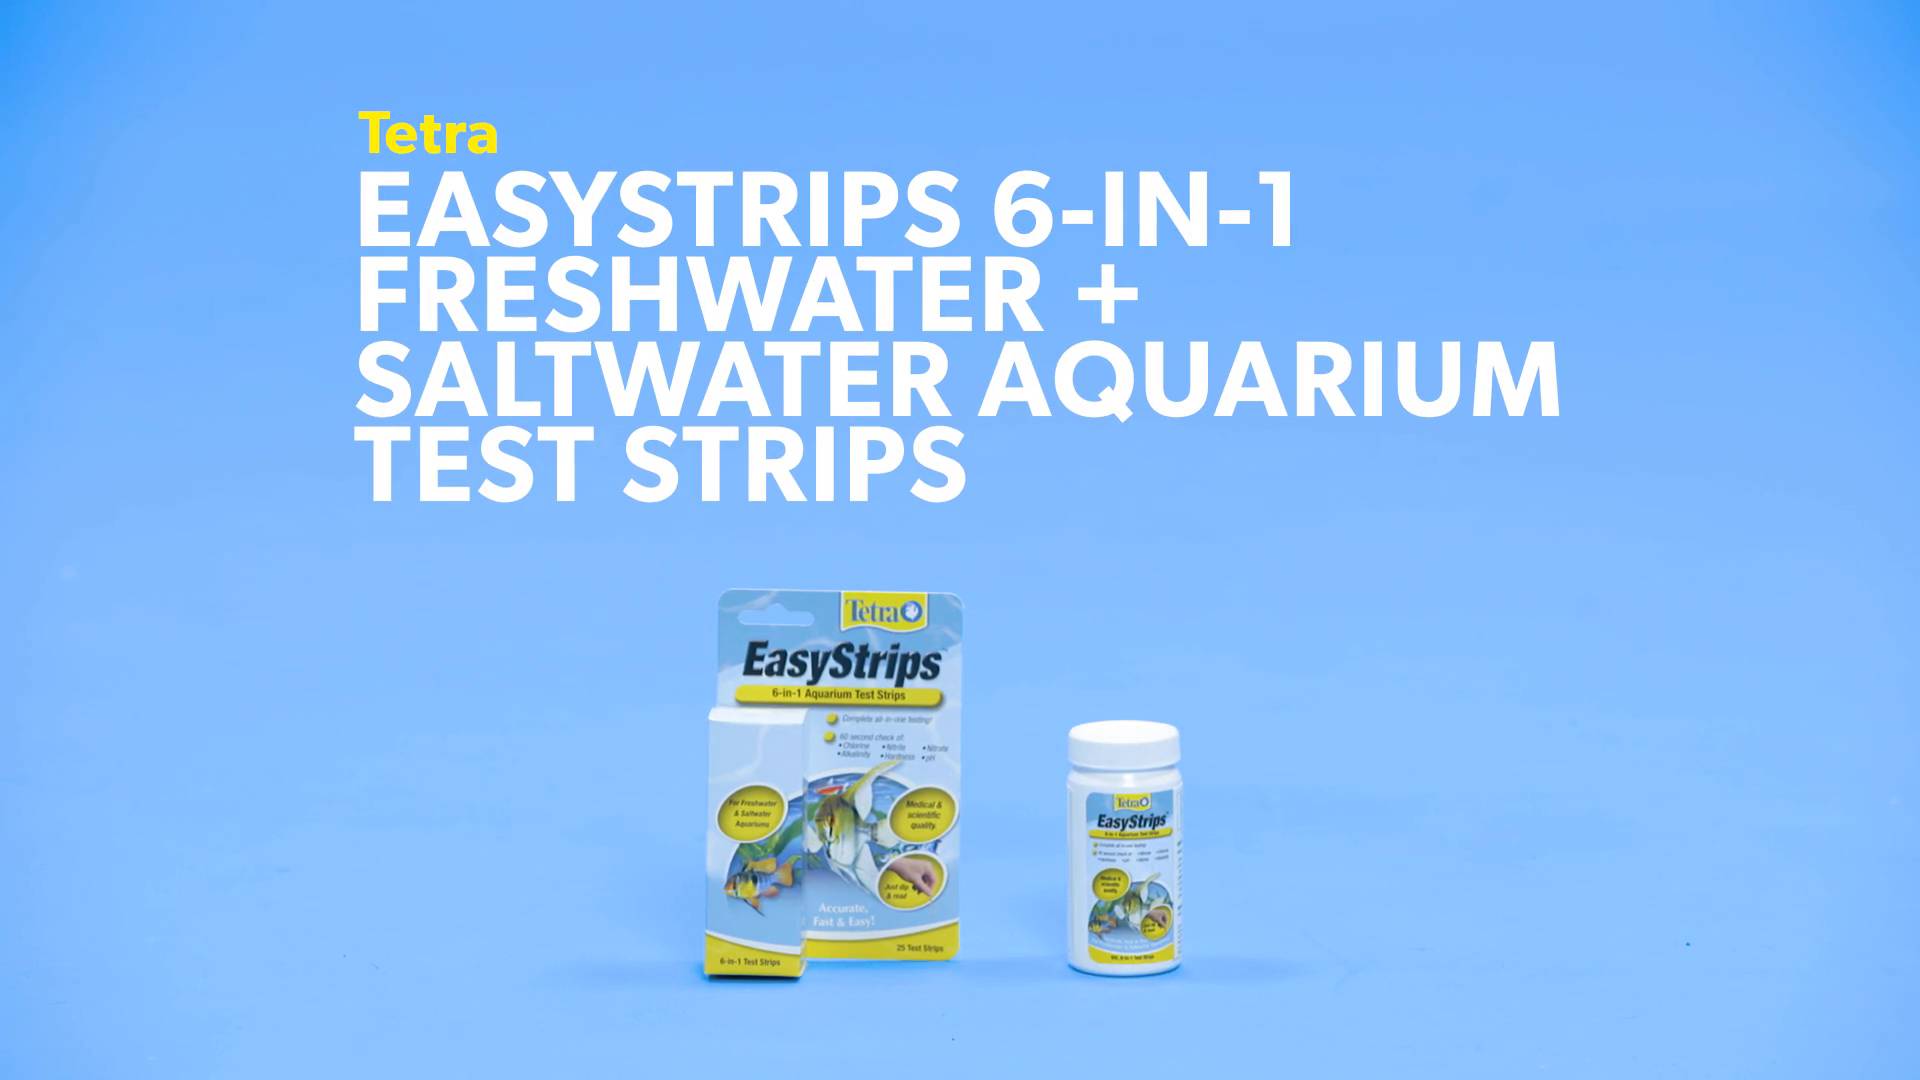 Tetra_EasyStrips6in1FreshwaterSaltwaterAquariumTestStrips_Fish_r0_v2